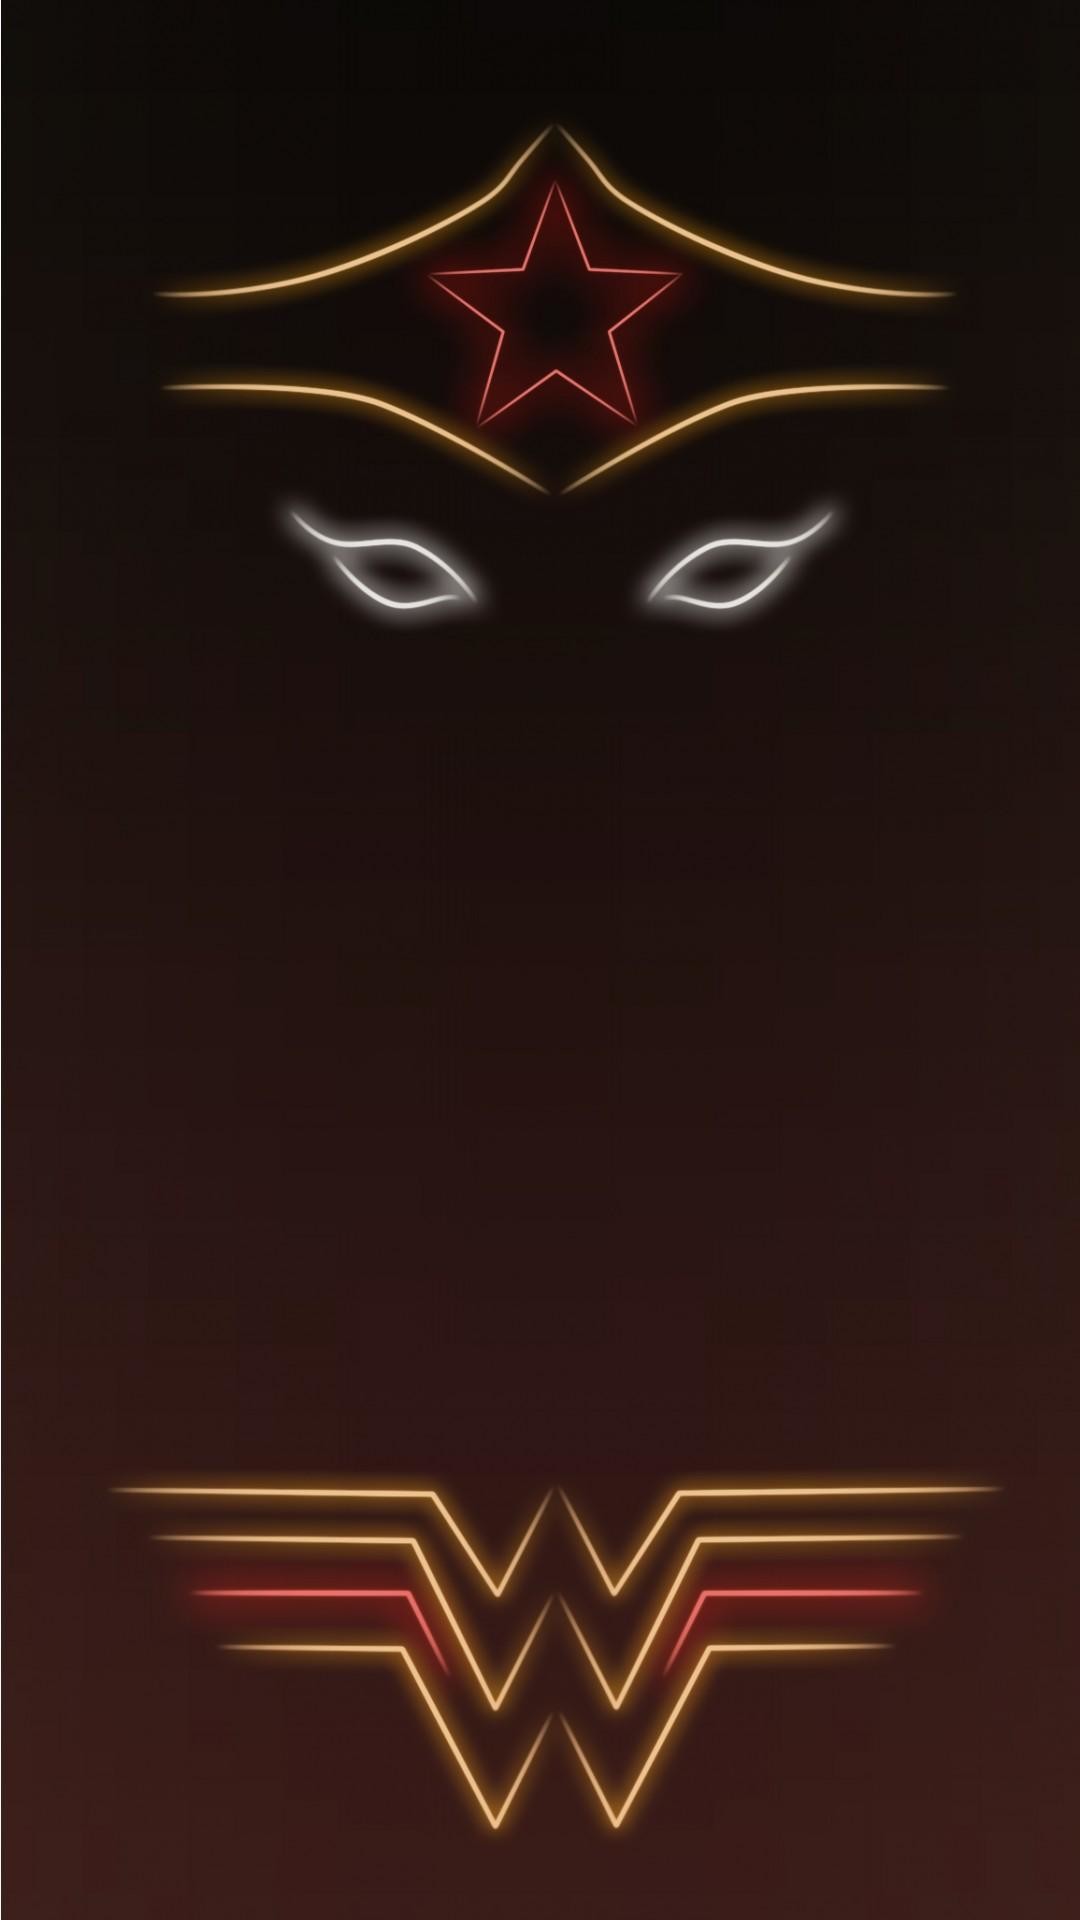 1080x1920 Wonder-woman.-Tap-to-see-more-Superheroes-Glow